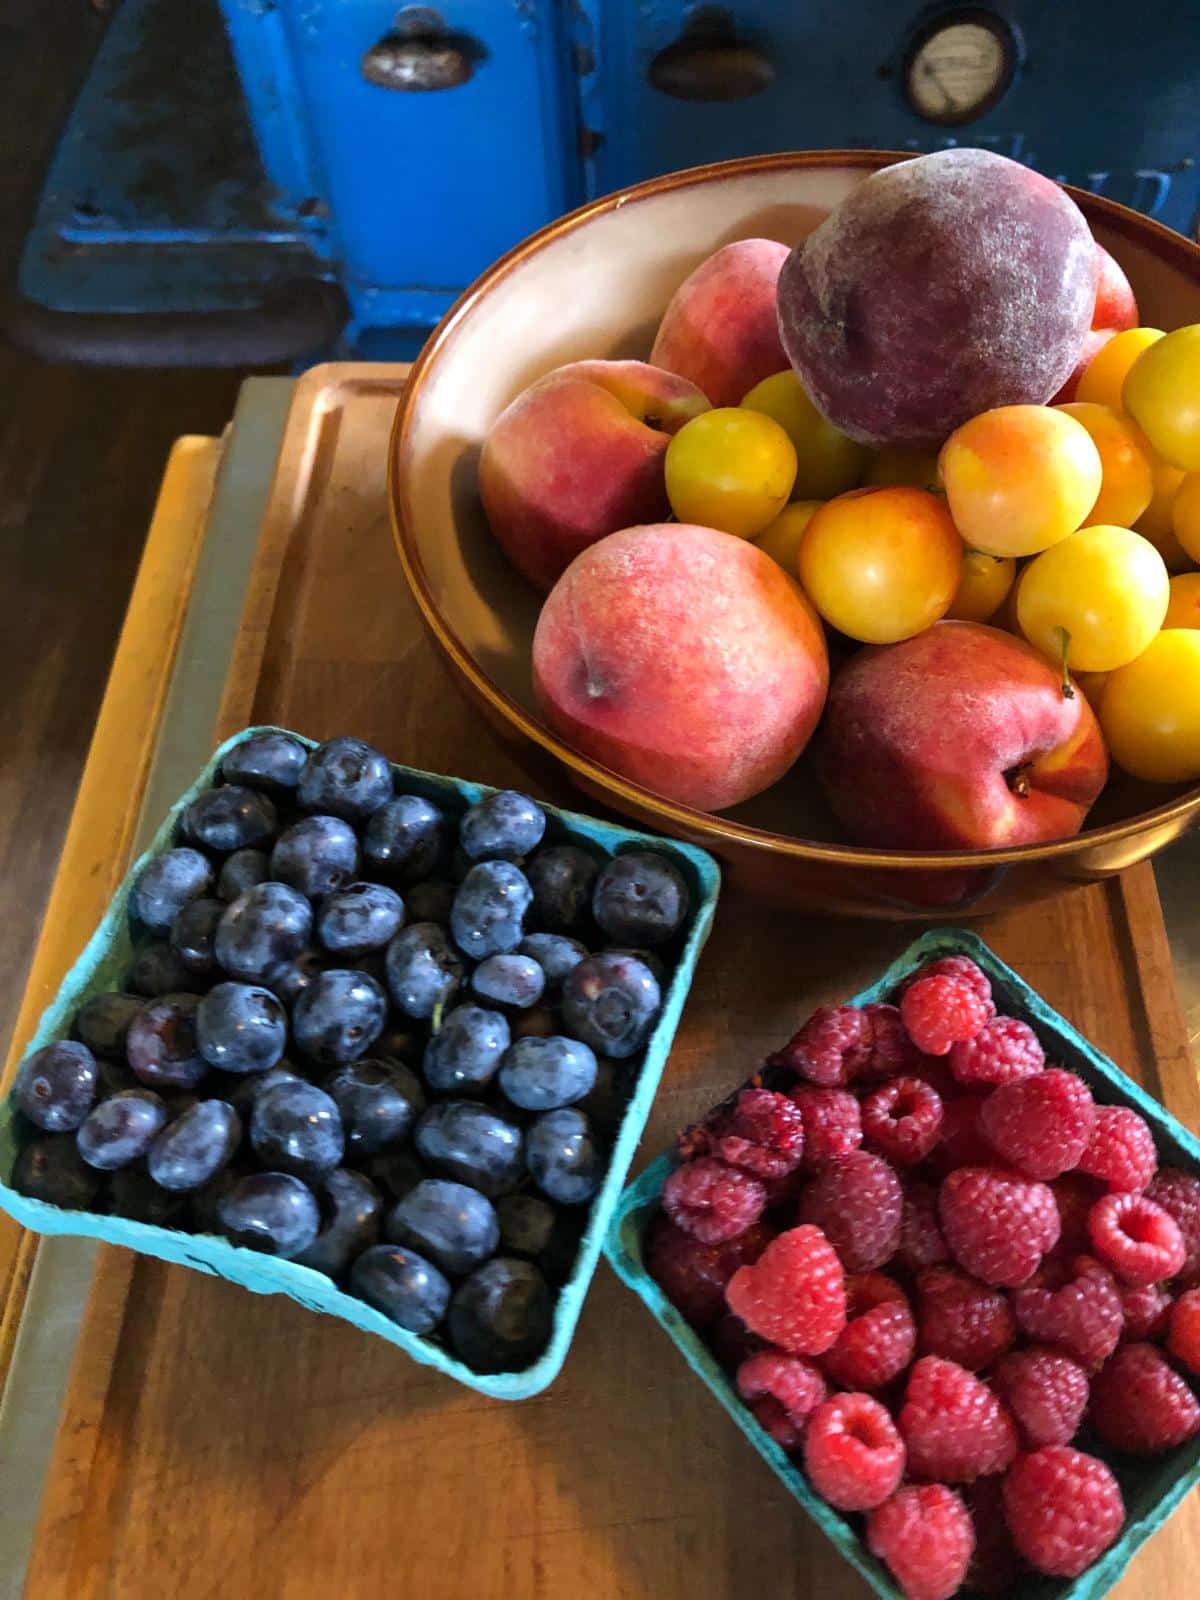 Fruits found on the Dirty Dozen list